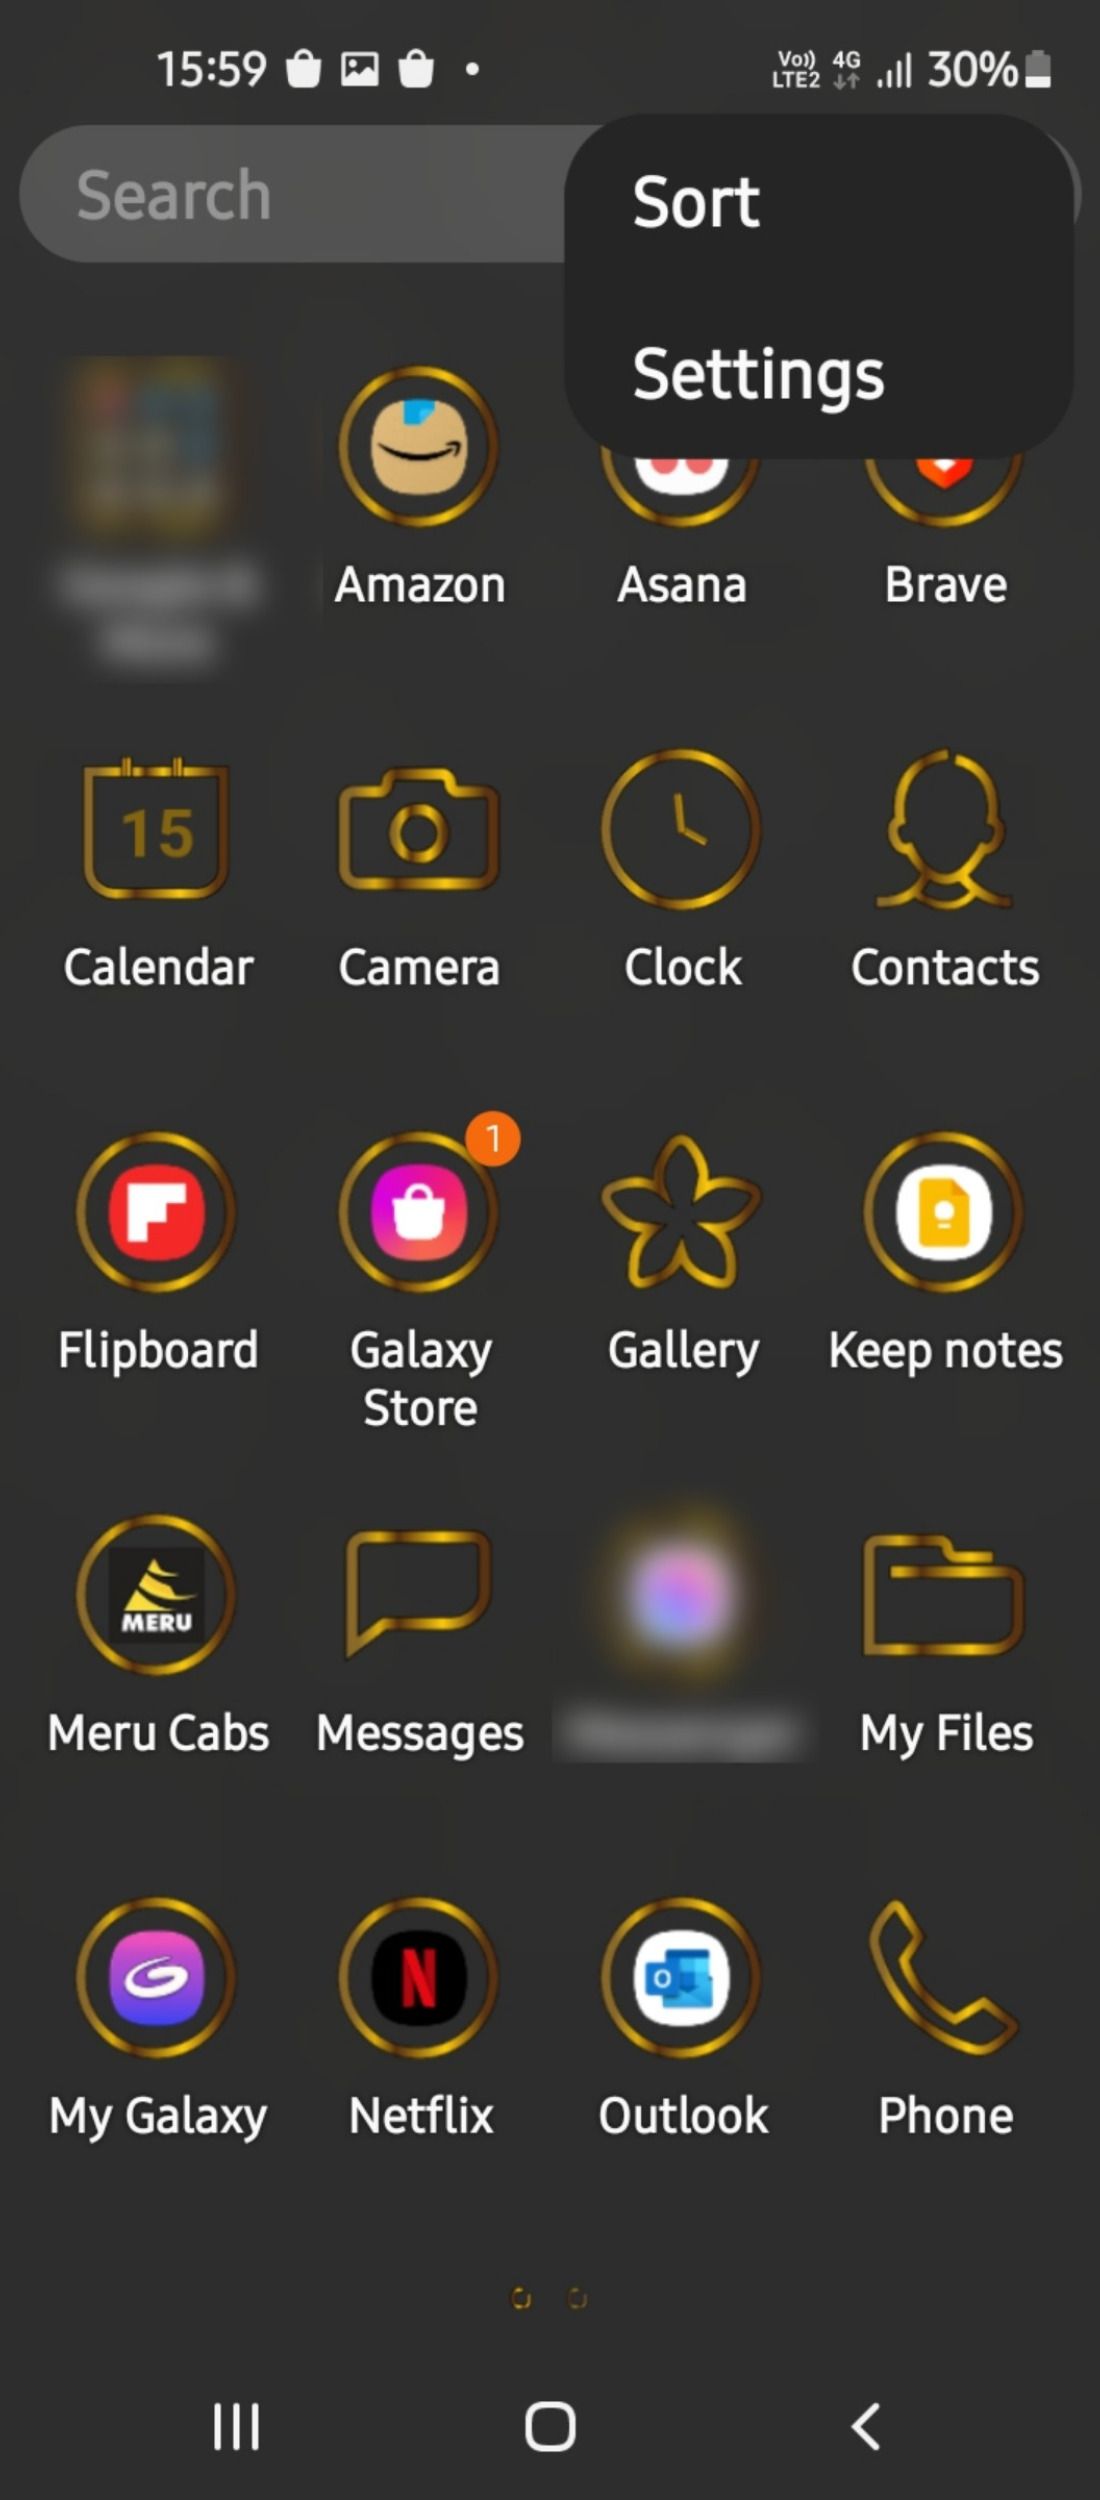 App drawer sort settings in Samsung smartphone